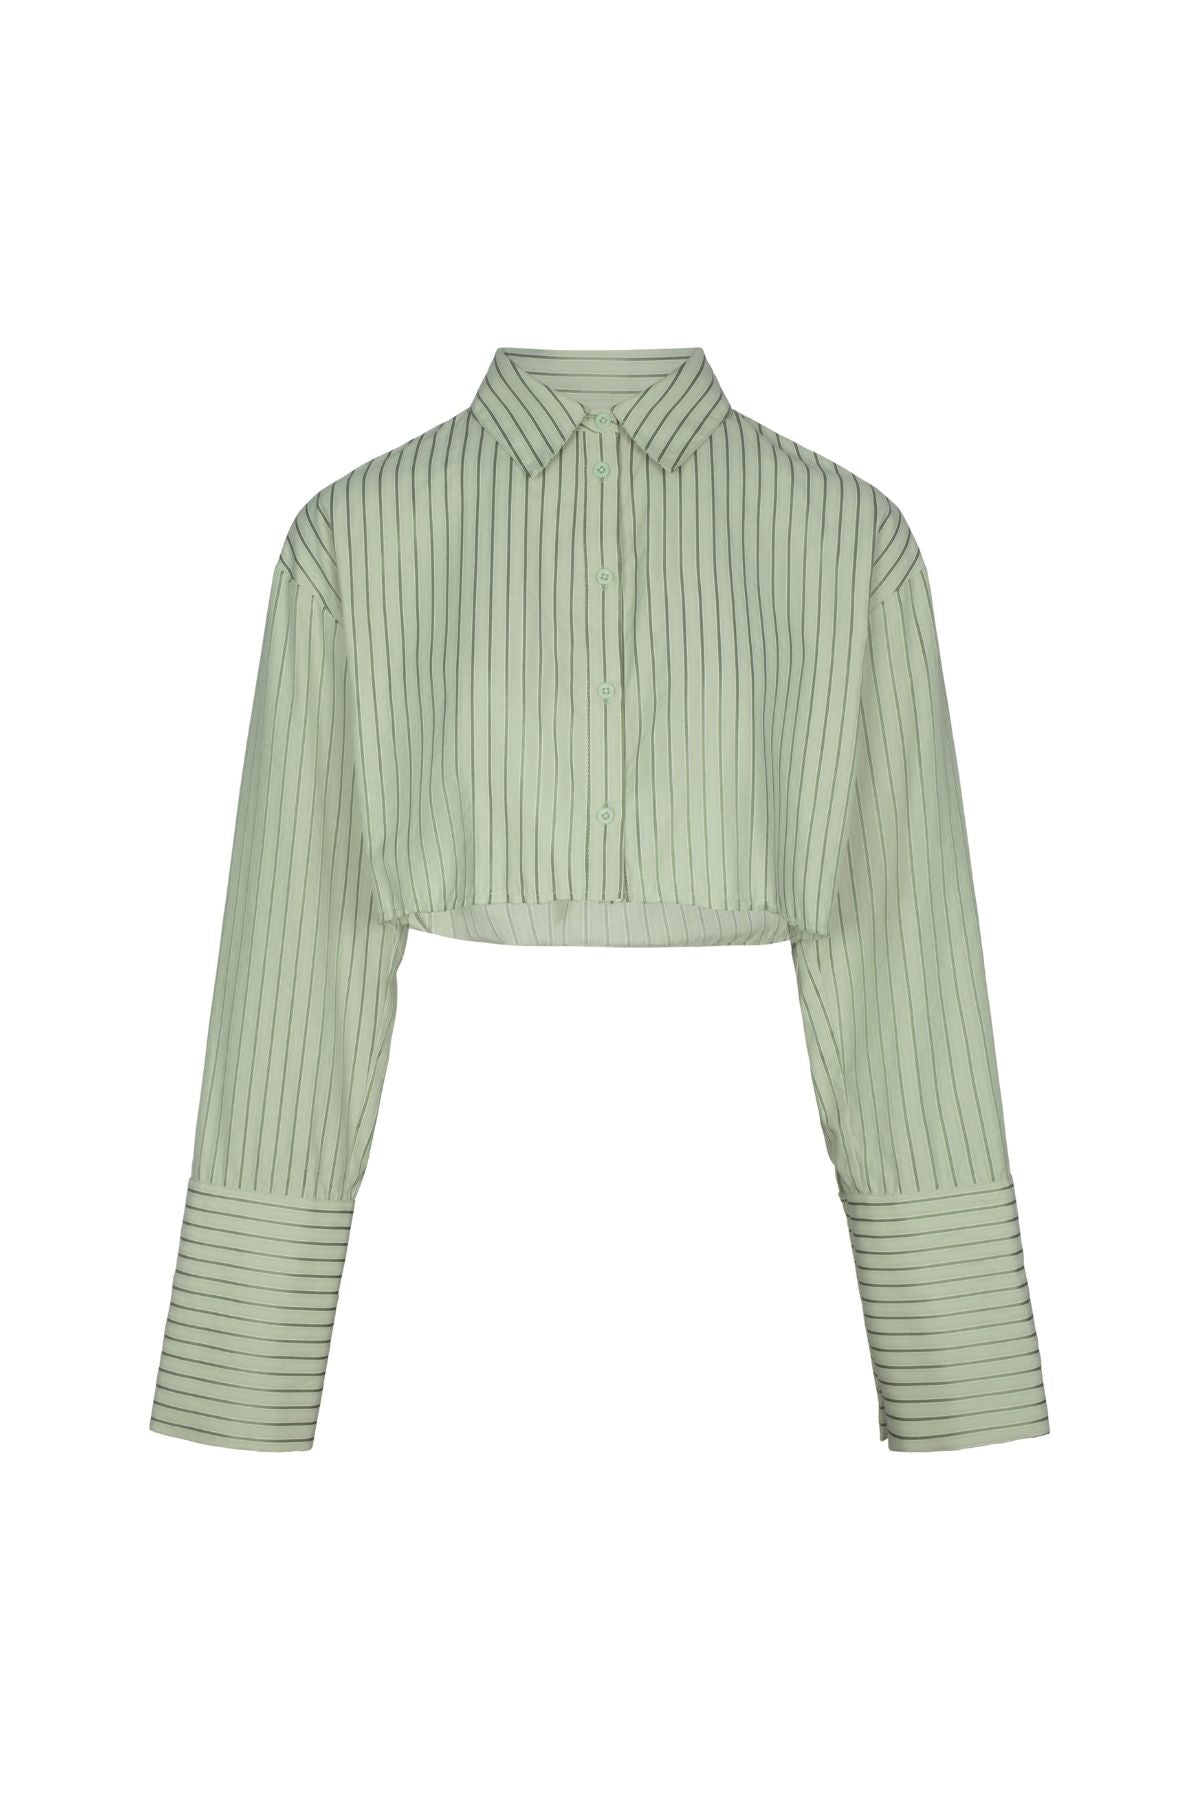 REIA Sage Green Stripe Cropped Shirt